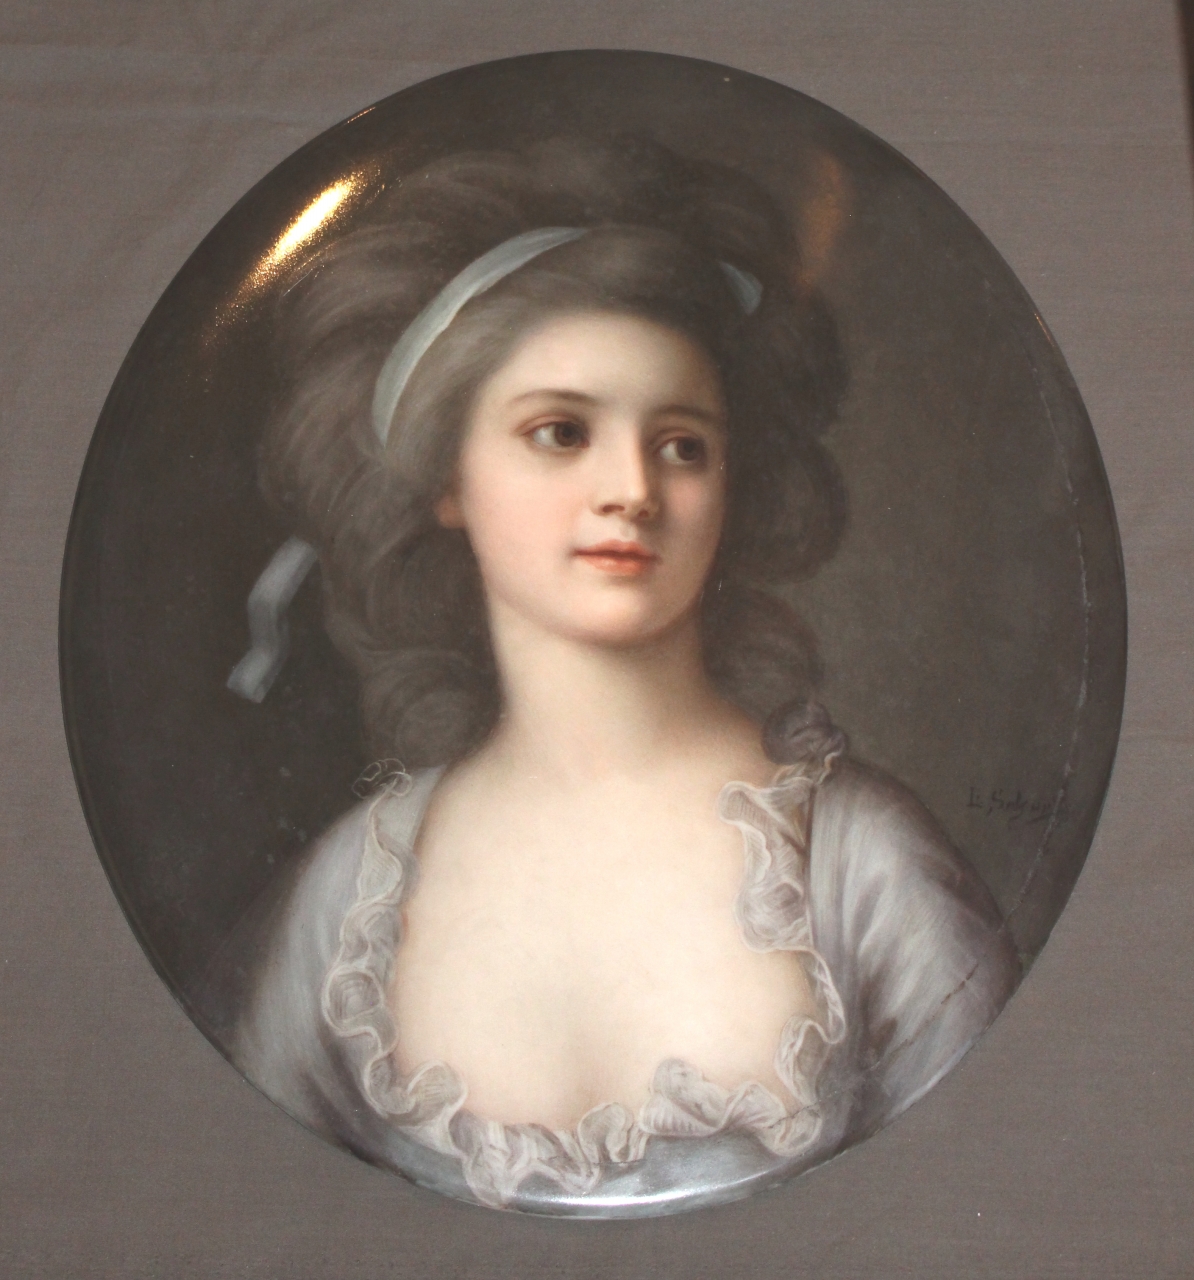 Gräfin Potoska, ritratto di Gräfin Potoska (dipinto) di Scherf Louis, Porzellanfabrik Galluba & Hofmann, Ilmenau (Turingia) - manifattura turingia (sec. XX)